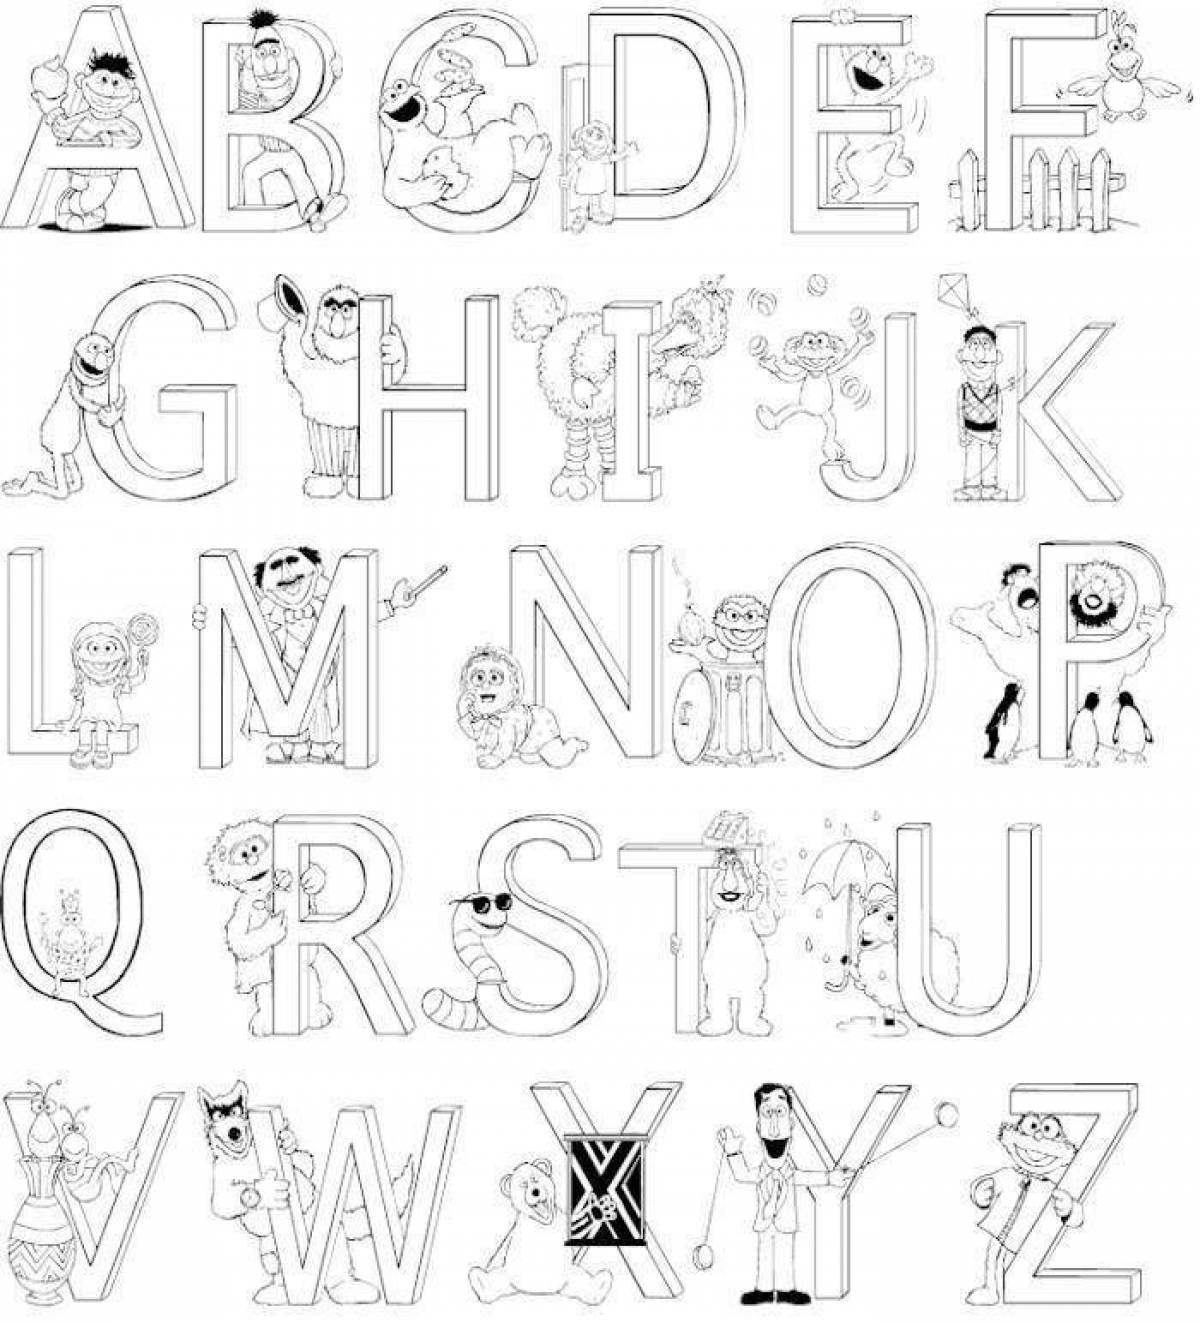 Splendid alphabet lore english coloring page